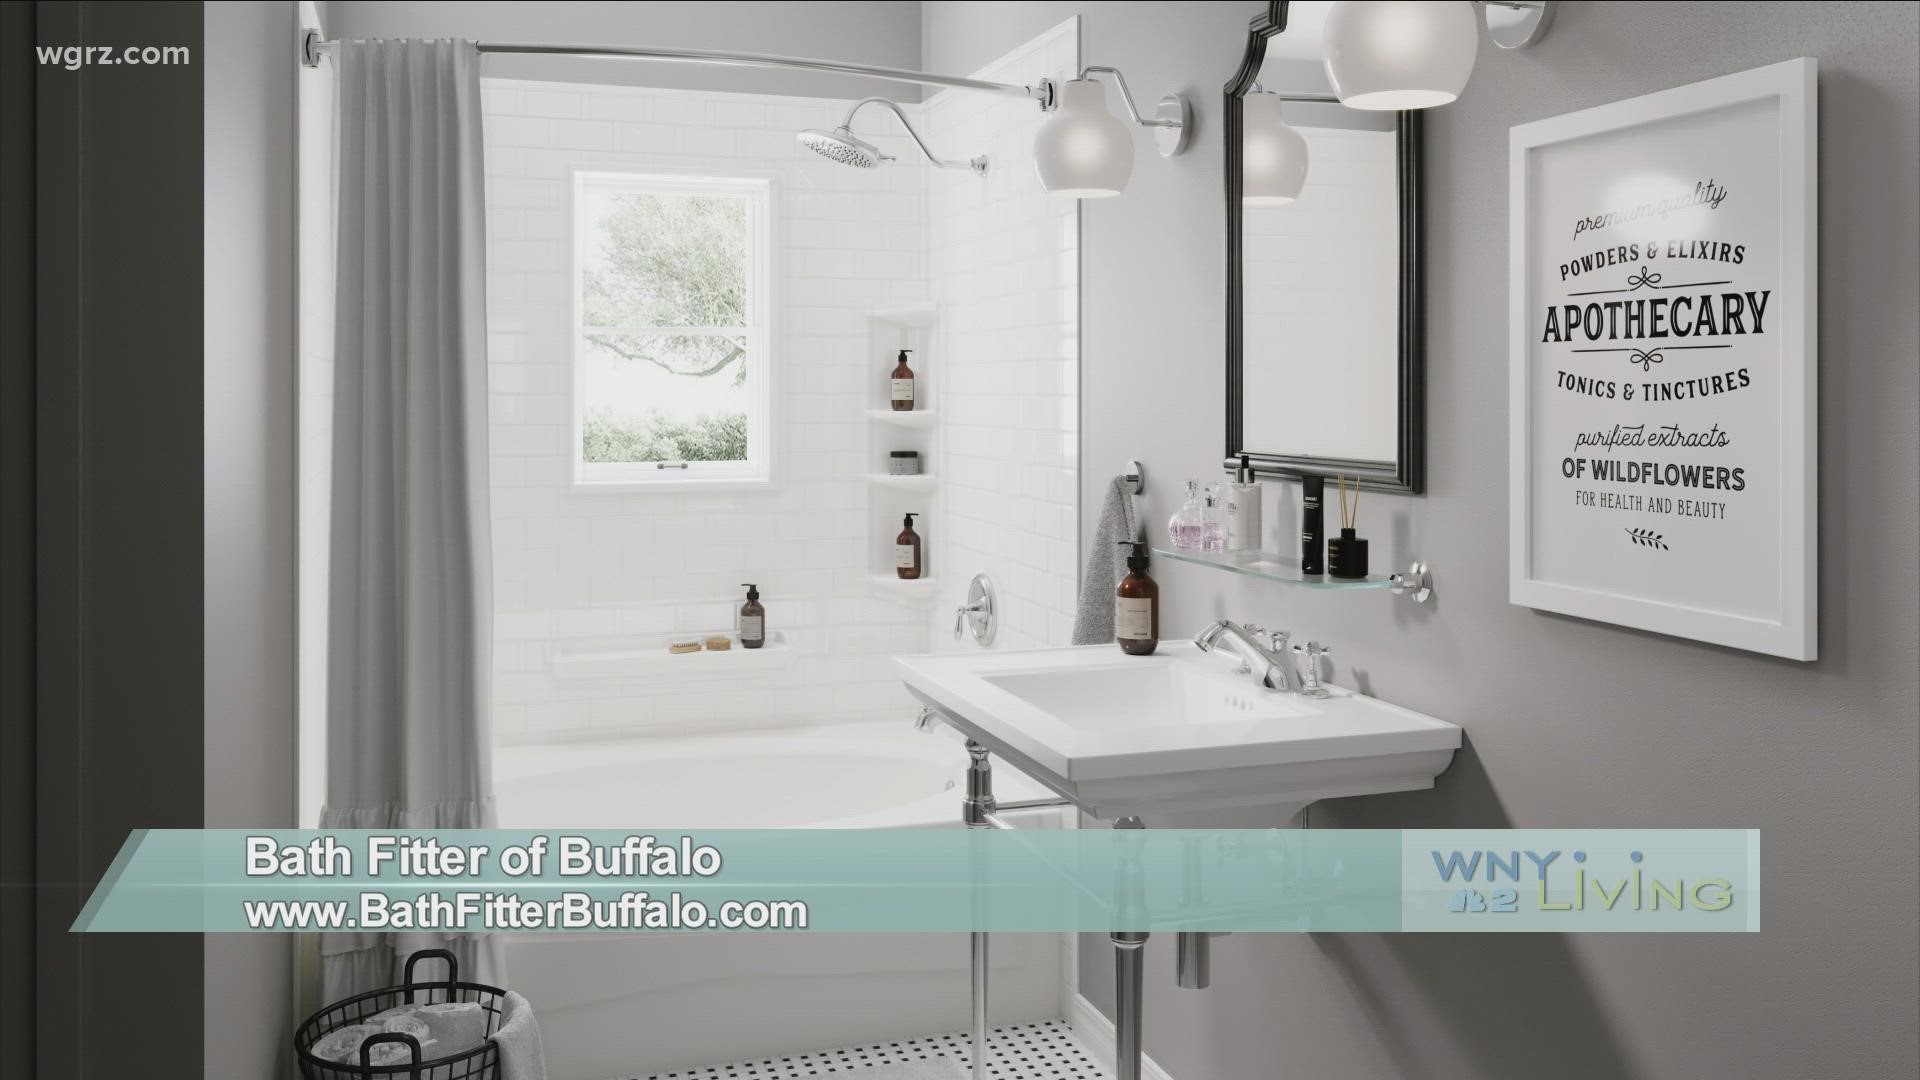 WNY Living - January 15 - Bath Fitter of Buffalo (THIS VIDEO IS SPONSORED BY BATH FITTER OF BUFFALO)